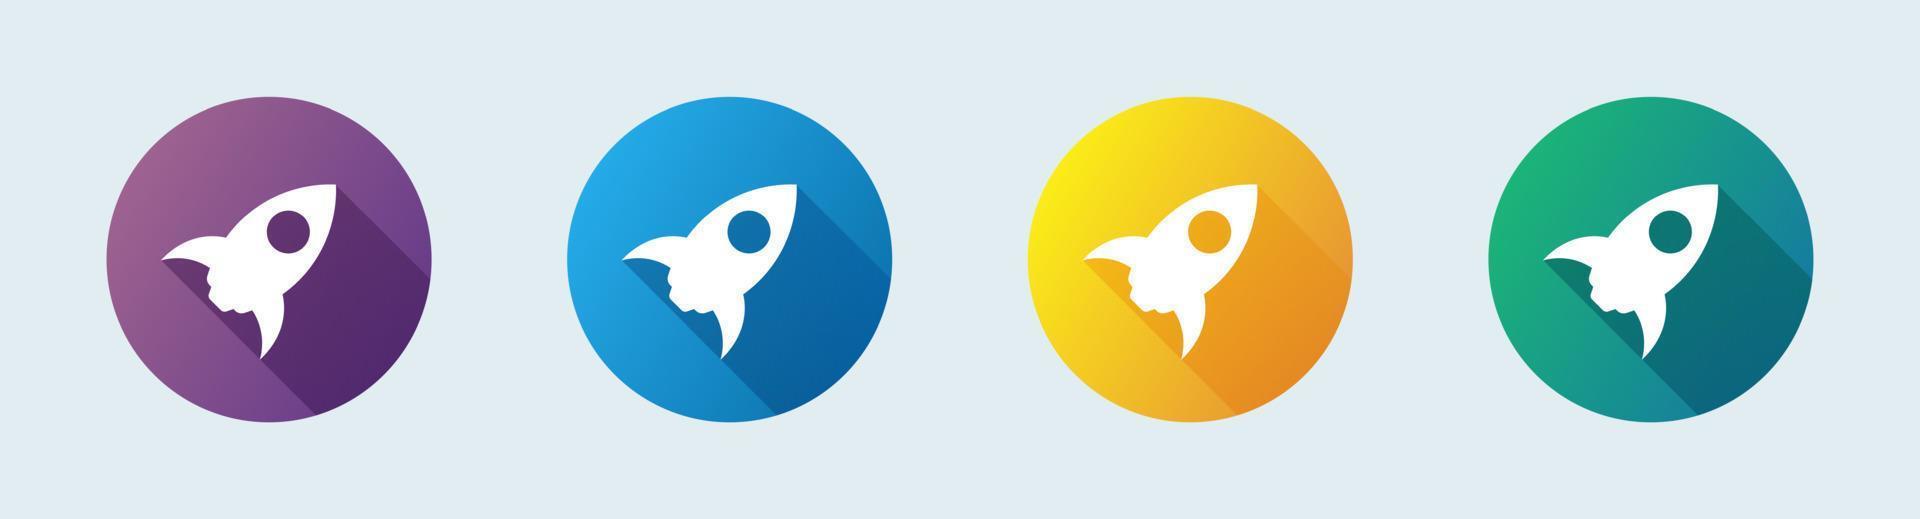 vetor de conjunto de ícones simples de foguete. ícone de vetor de nave espacial em estilo design plano.